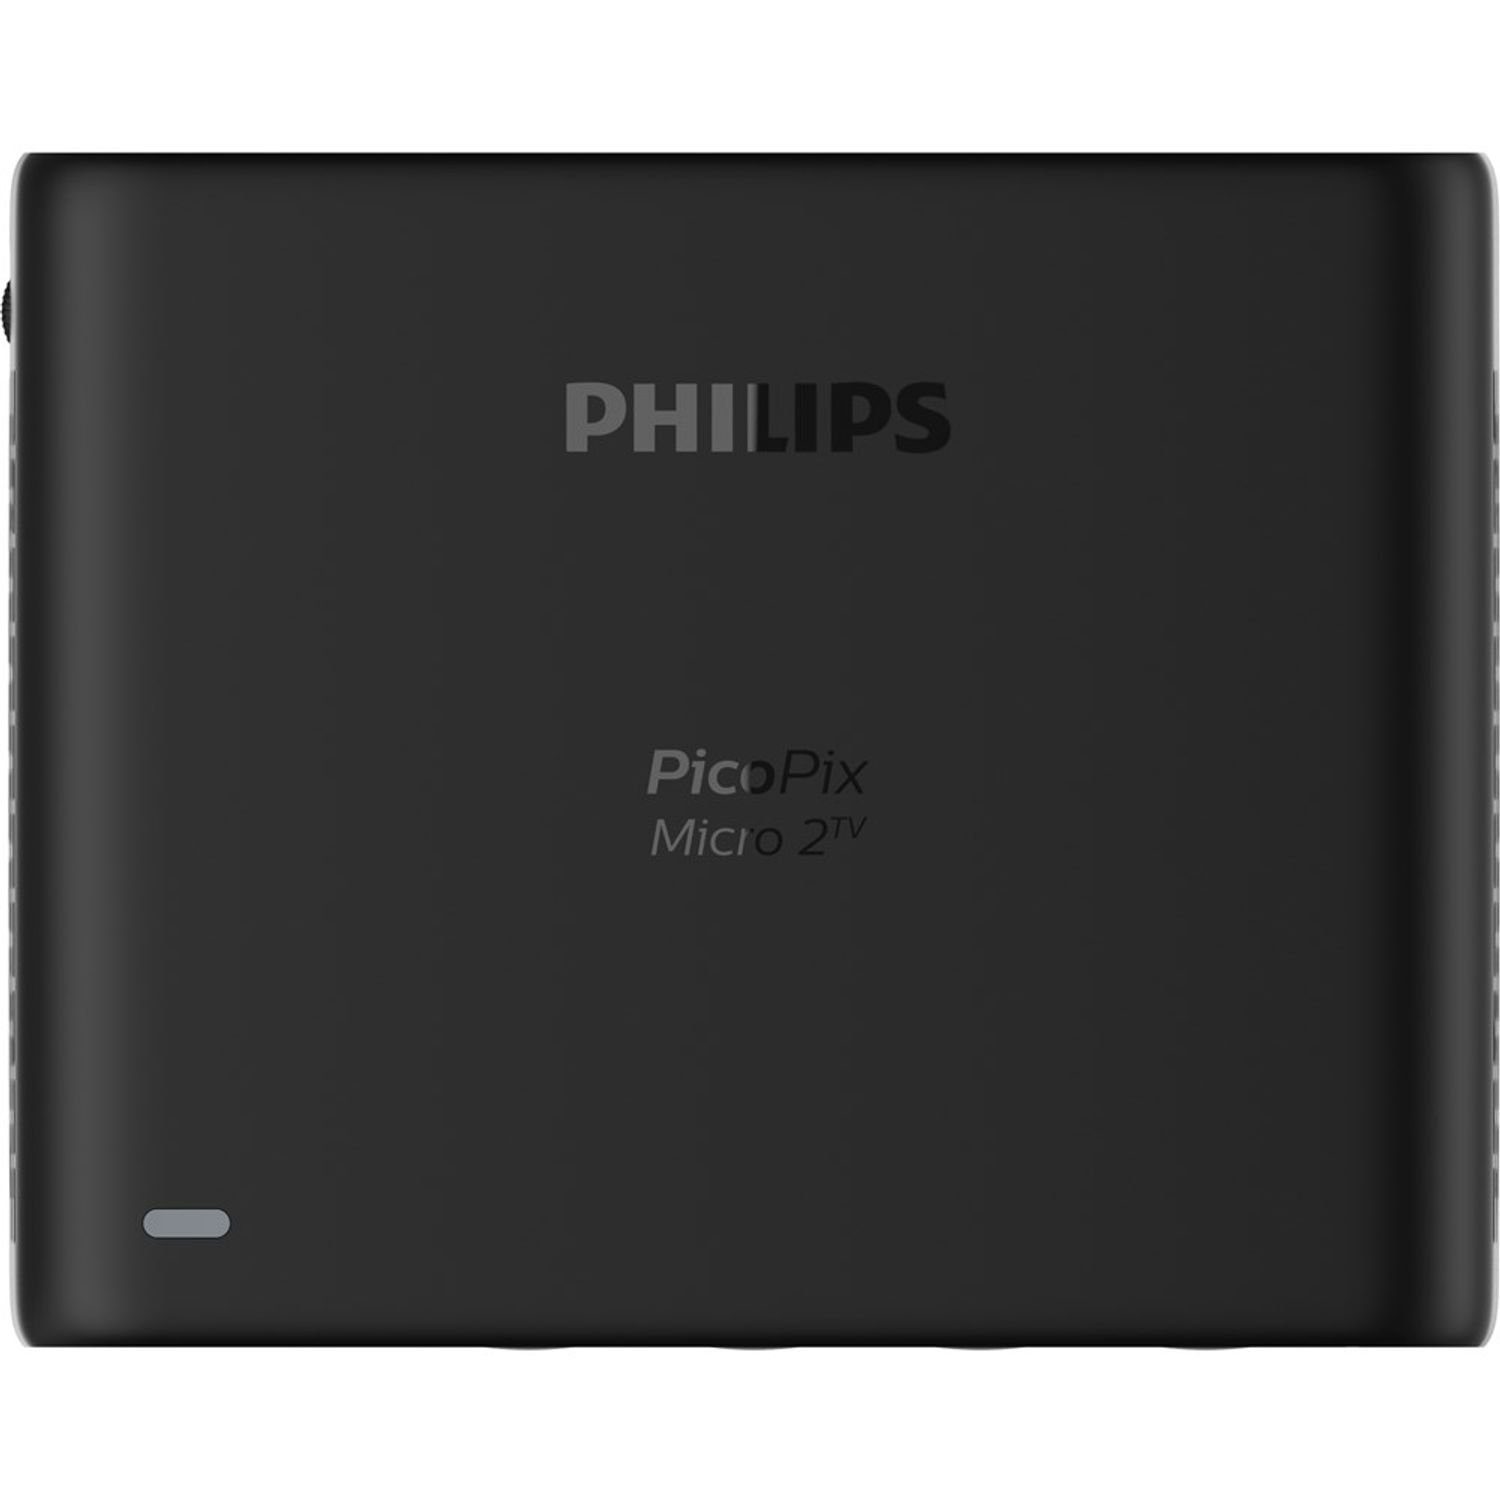 10.0 PicoPix Laufzeit) TV 10W Stereo-Lautsprecher,4 Philips 480 854 zu px, WLAN, Android Micro 80'', TV, x Std. 2TV Projektor bis 80" Android Beamer Portabler DSP (600:1,